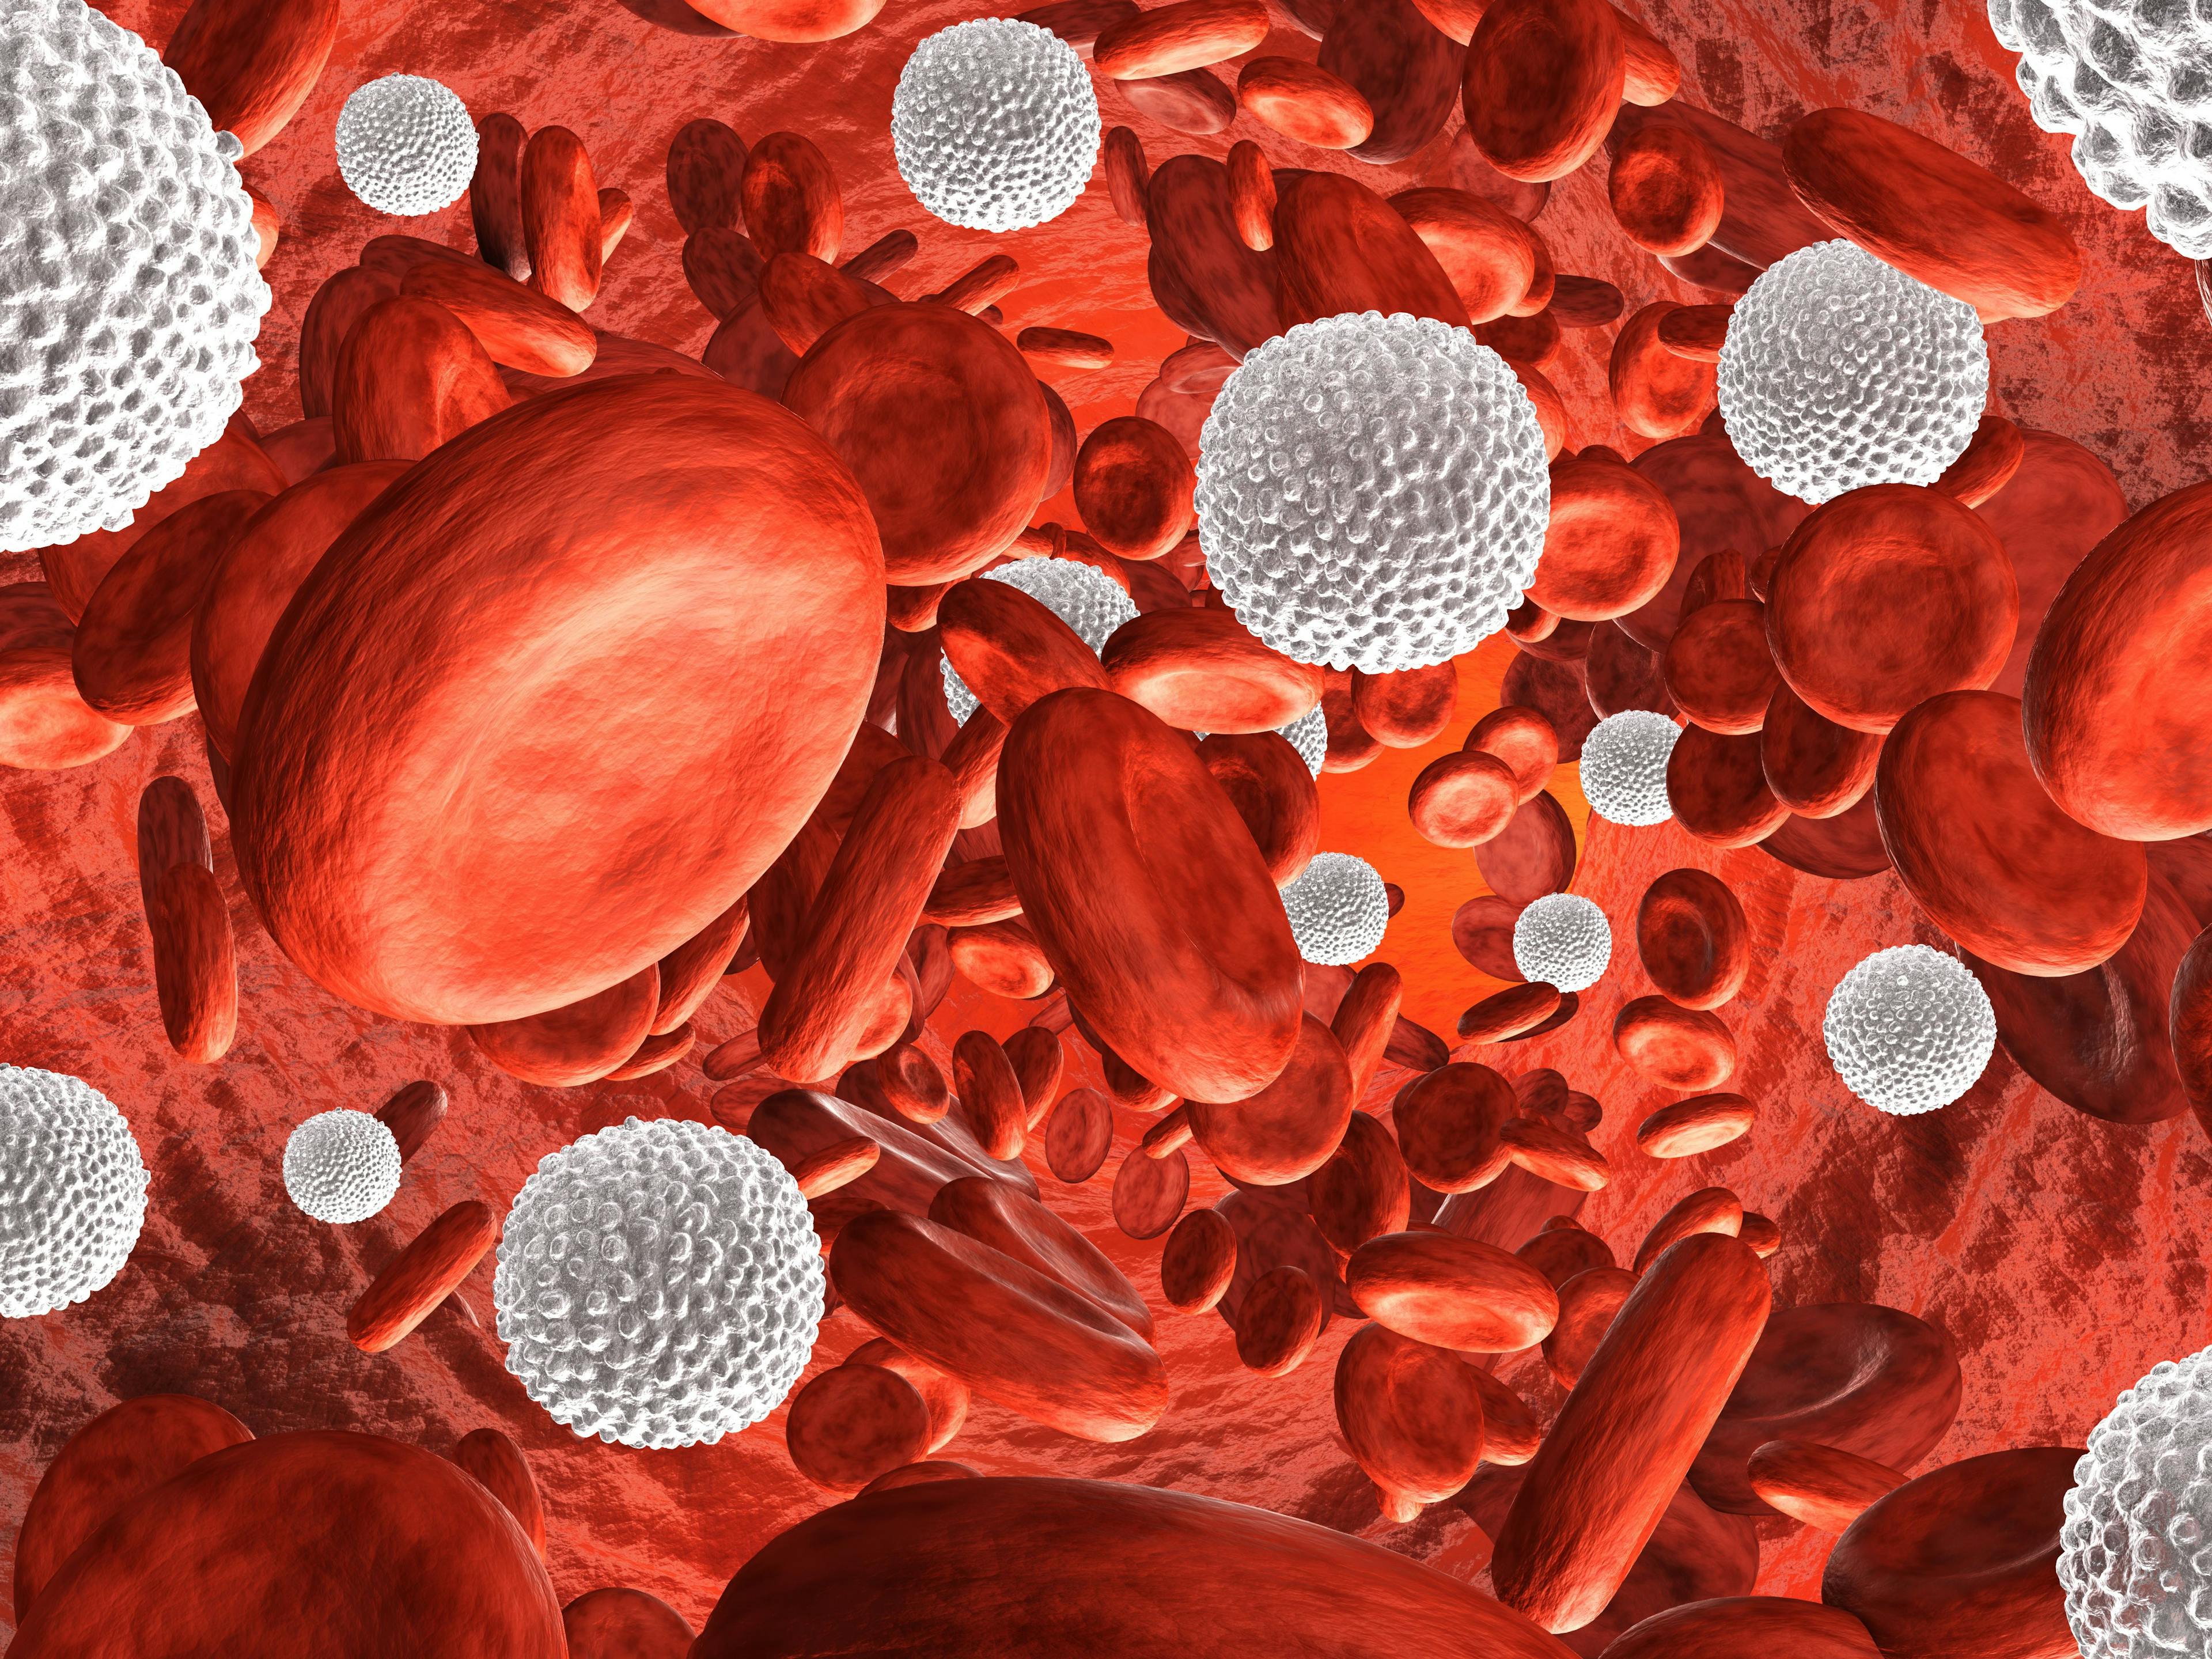 Zandelisib/Zanubrutinib Combination in R/R CLL and B-Cell Malignancies Shows Clinical Benefit